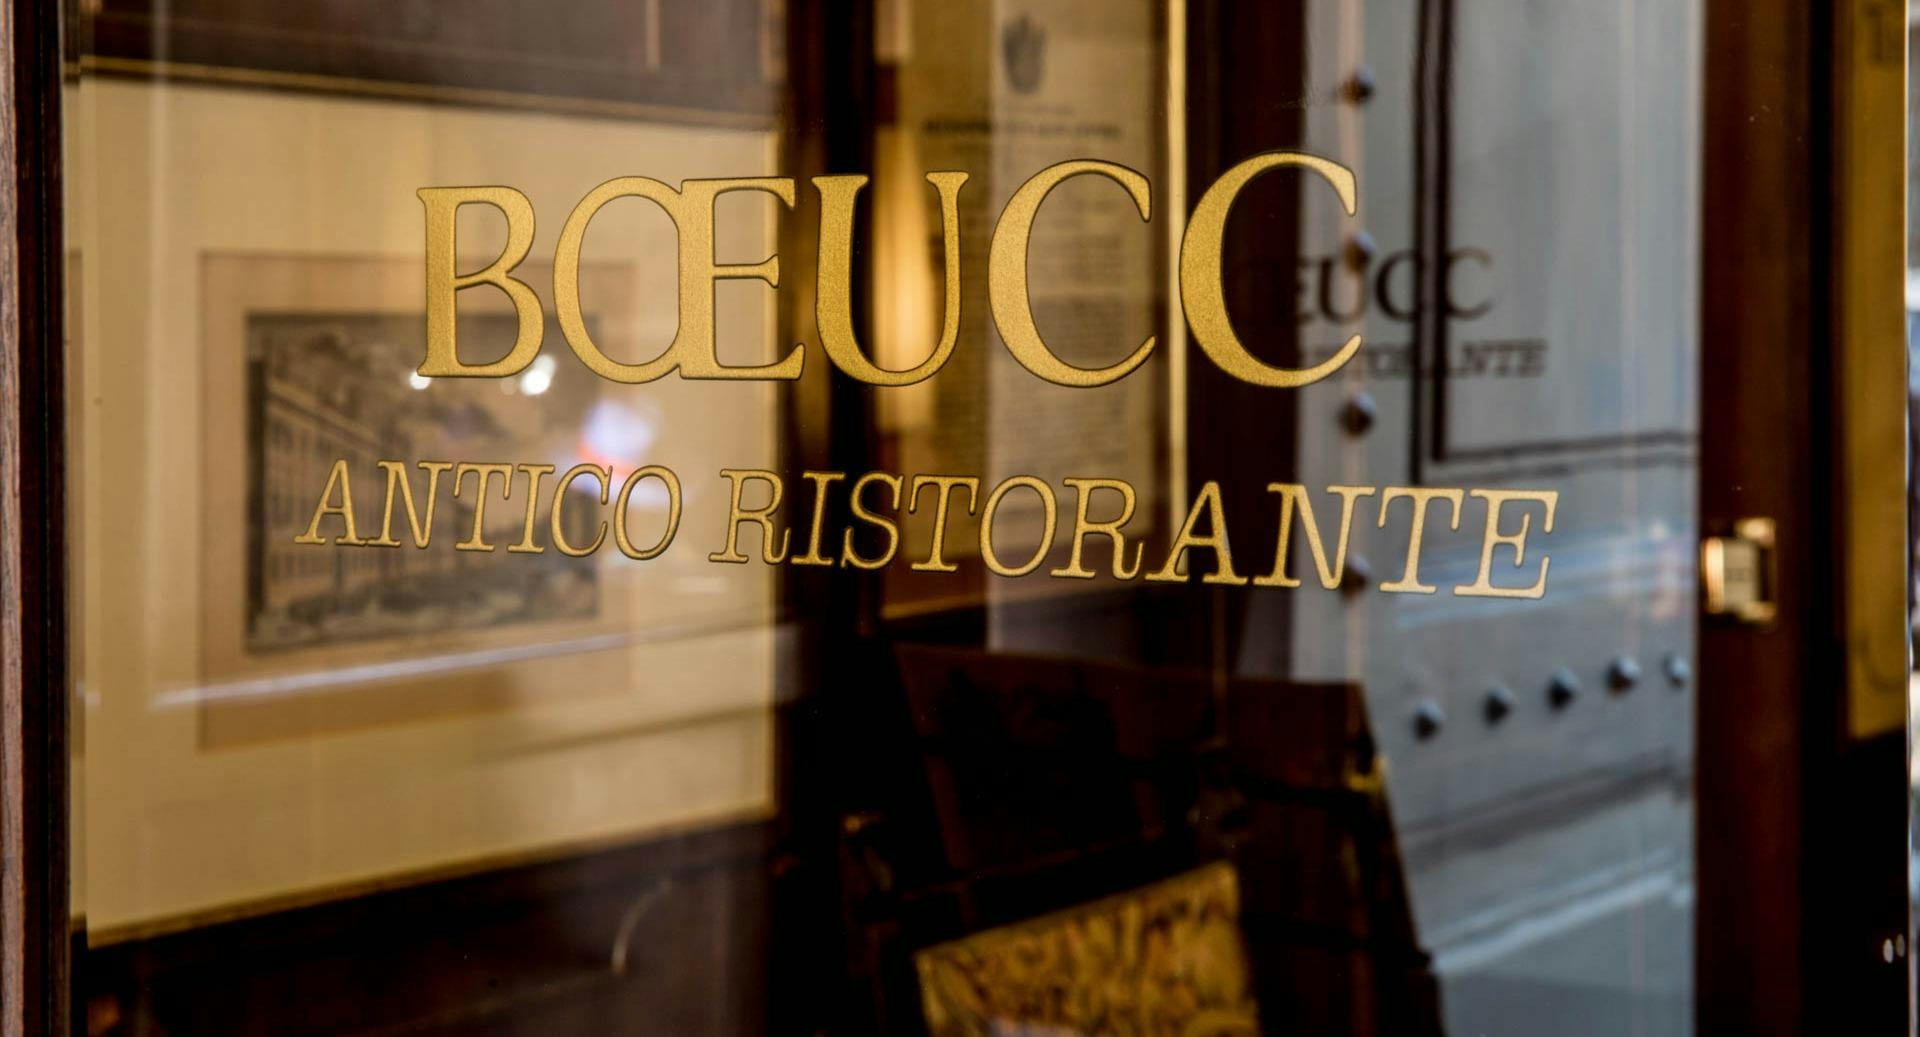 Photo of restaurant Boeucc - Since 1696 in Centre, Milan